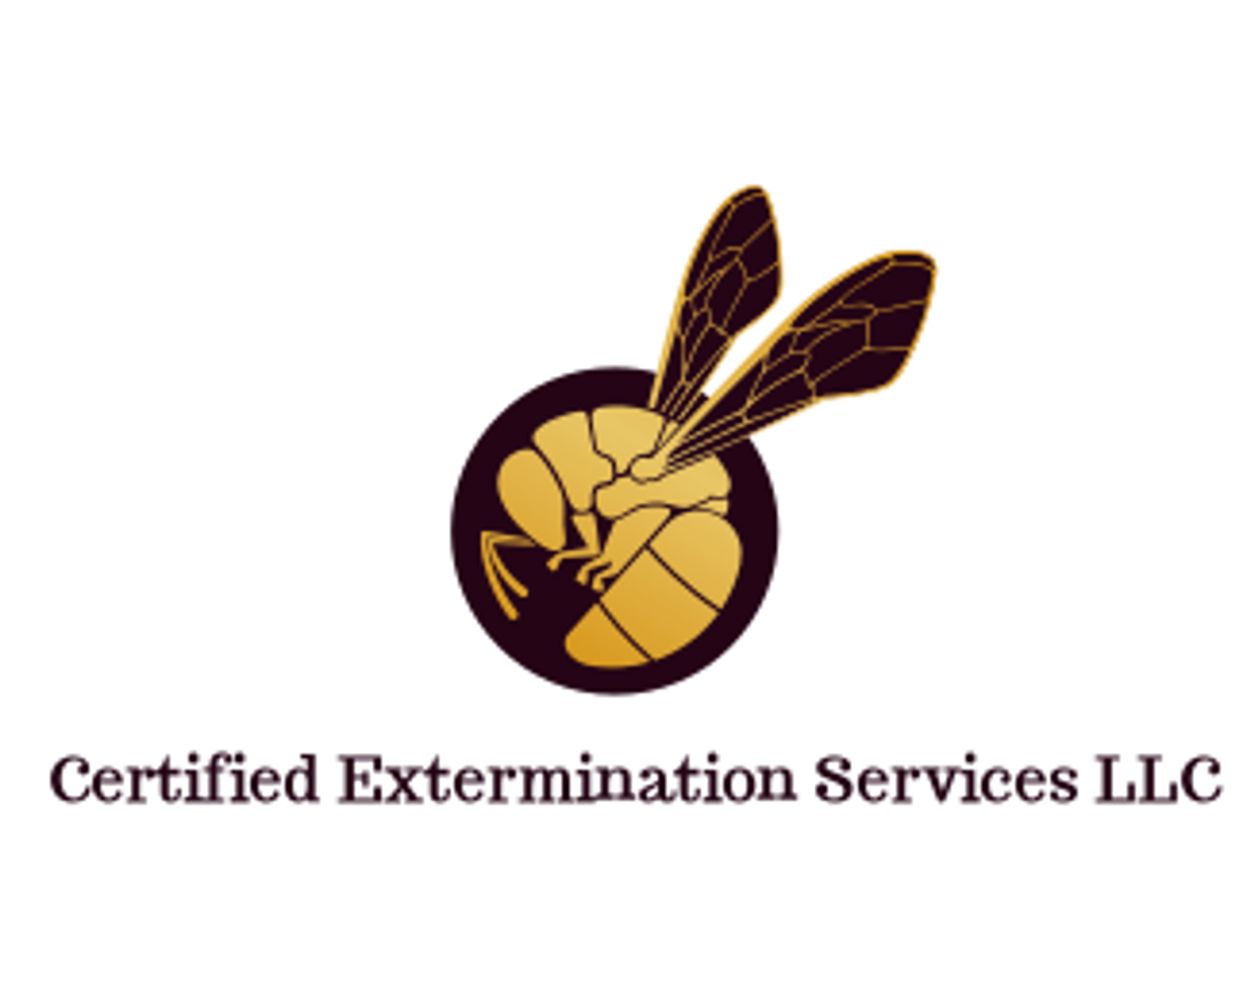 Licensed Bed Bug Extermination Services in Columbus Ohio